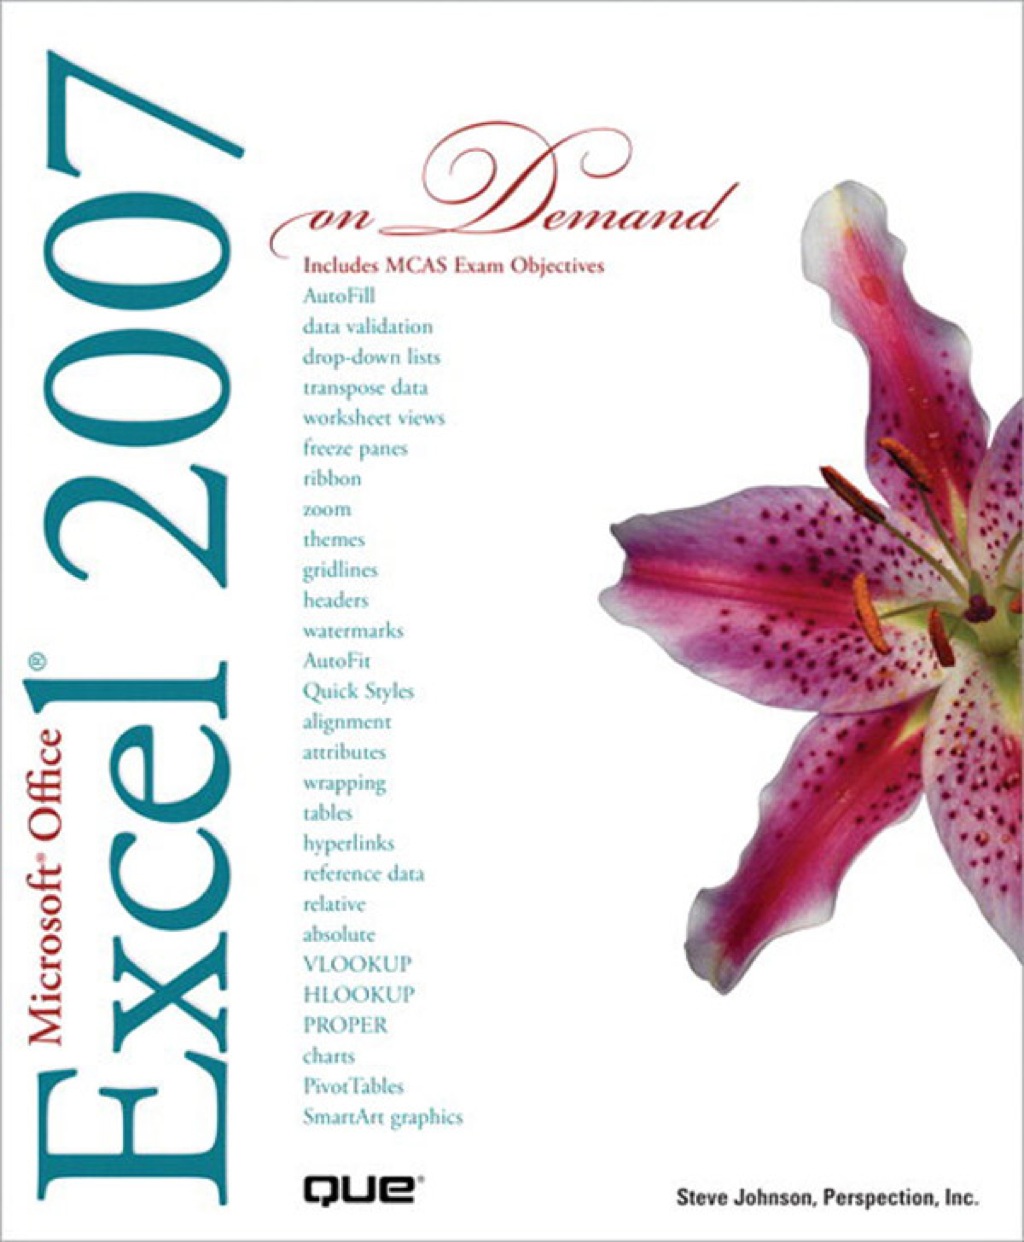 Microsoft Office Excel 2007 On Demand: MS OFC 2007 ON DE_1 (eBook) - Perspection Inc.; Steve Johnson